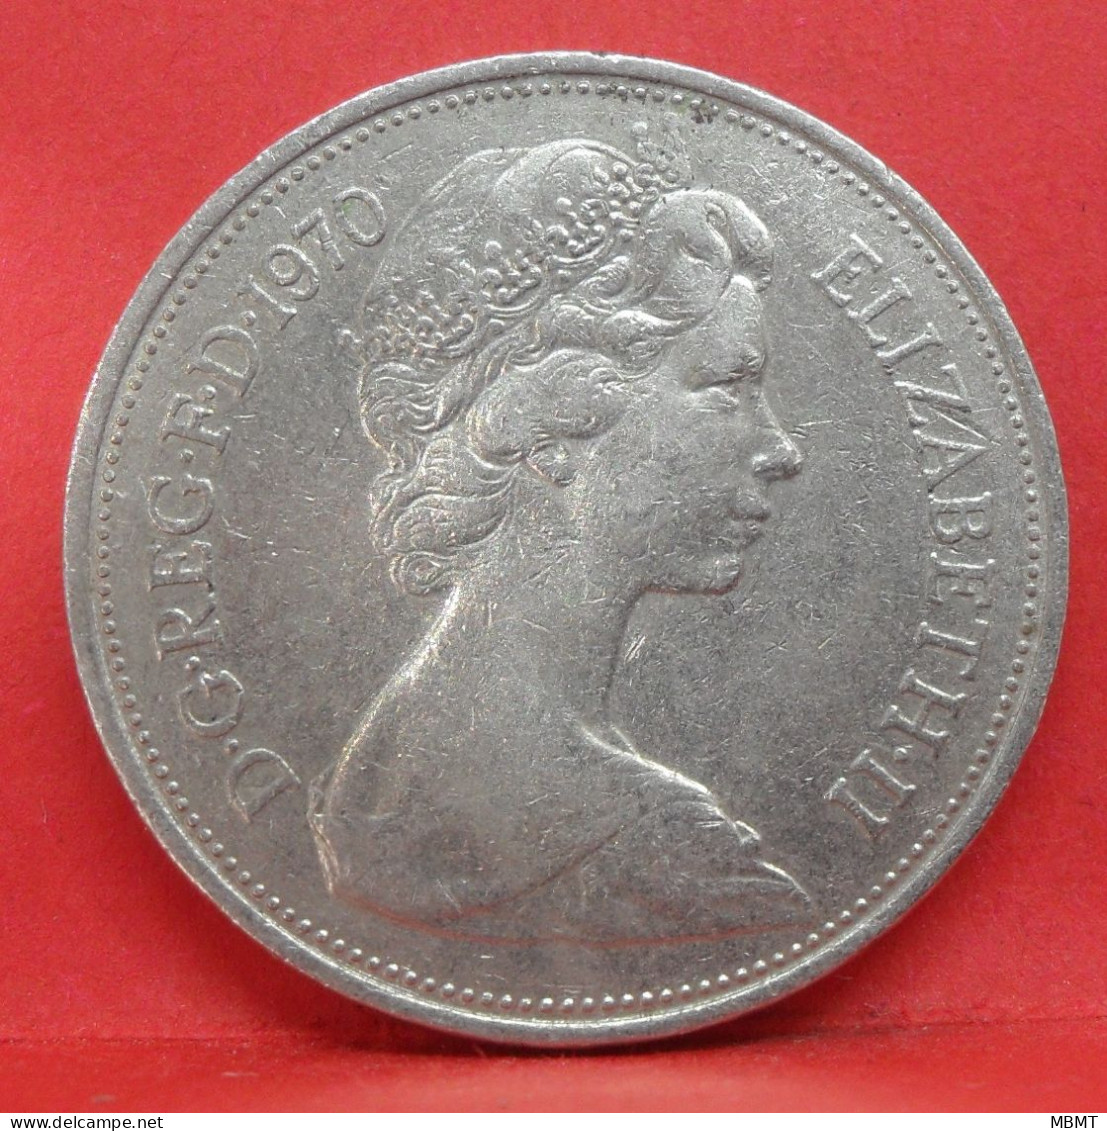 10 Pence 1970 - TB - Pièce Monnaie Grande-Bretagne - Article N°2818 - 10 Pence & 10 New Pence